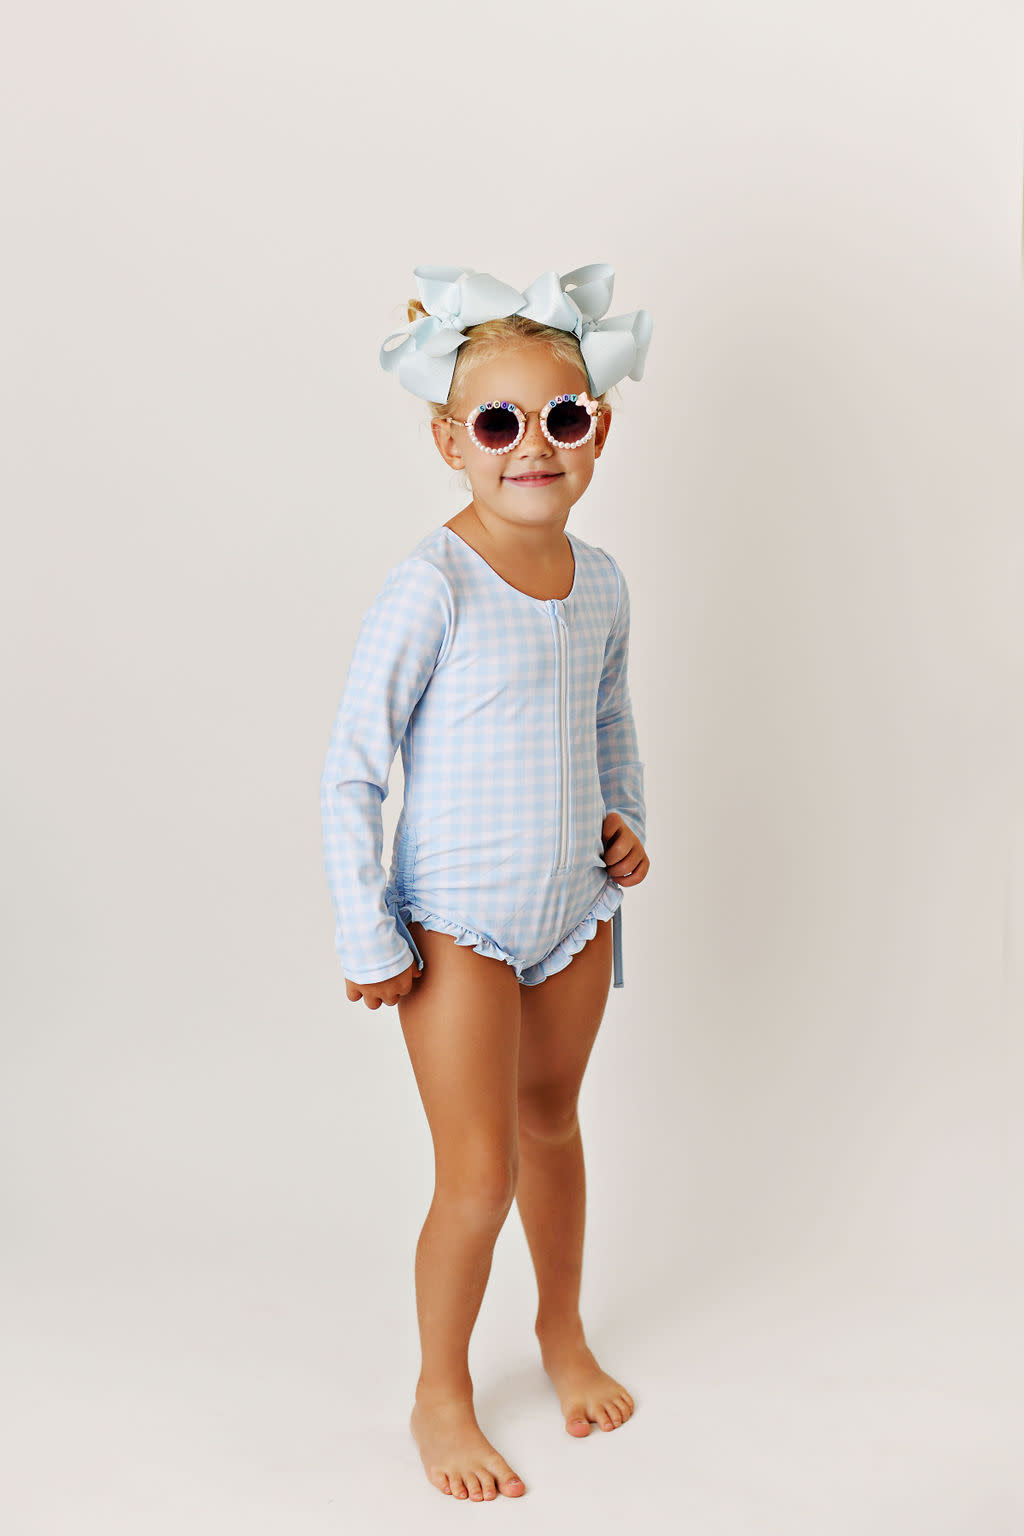 Swoon Baby Clothing Baby & Toddler 1 pc Rashgaurd Swimsuit